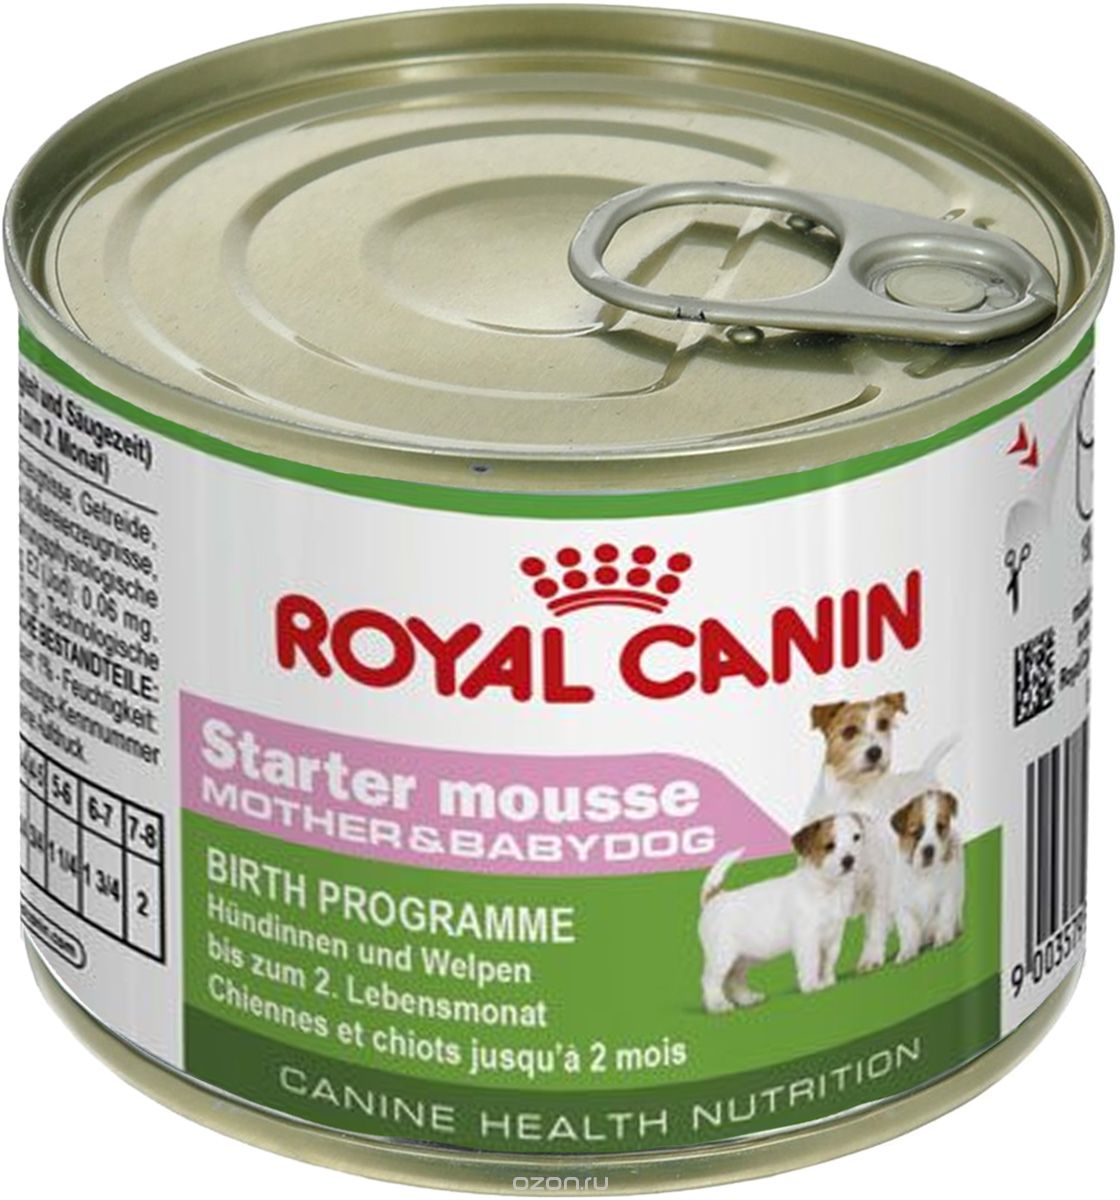  Royal Canin 